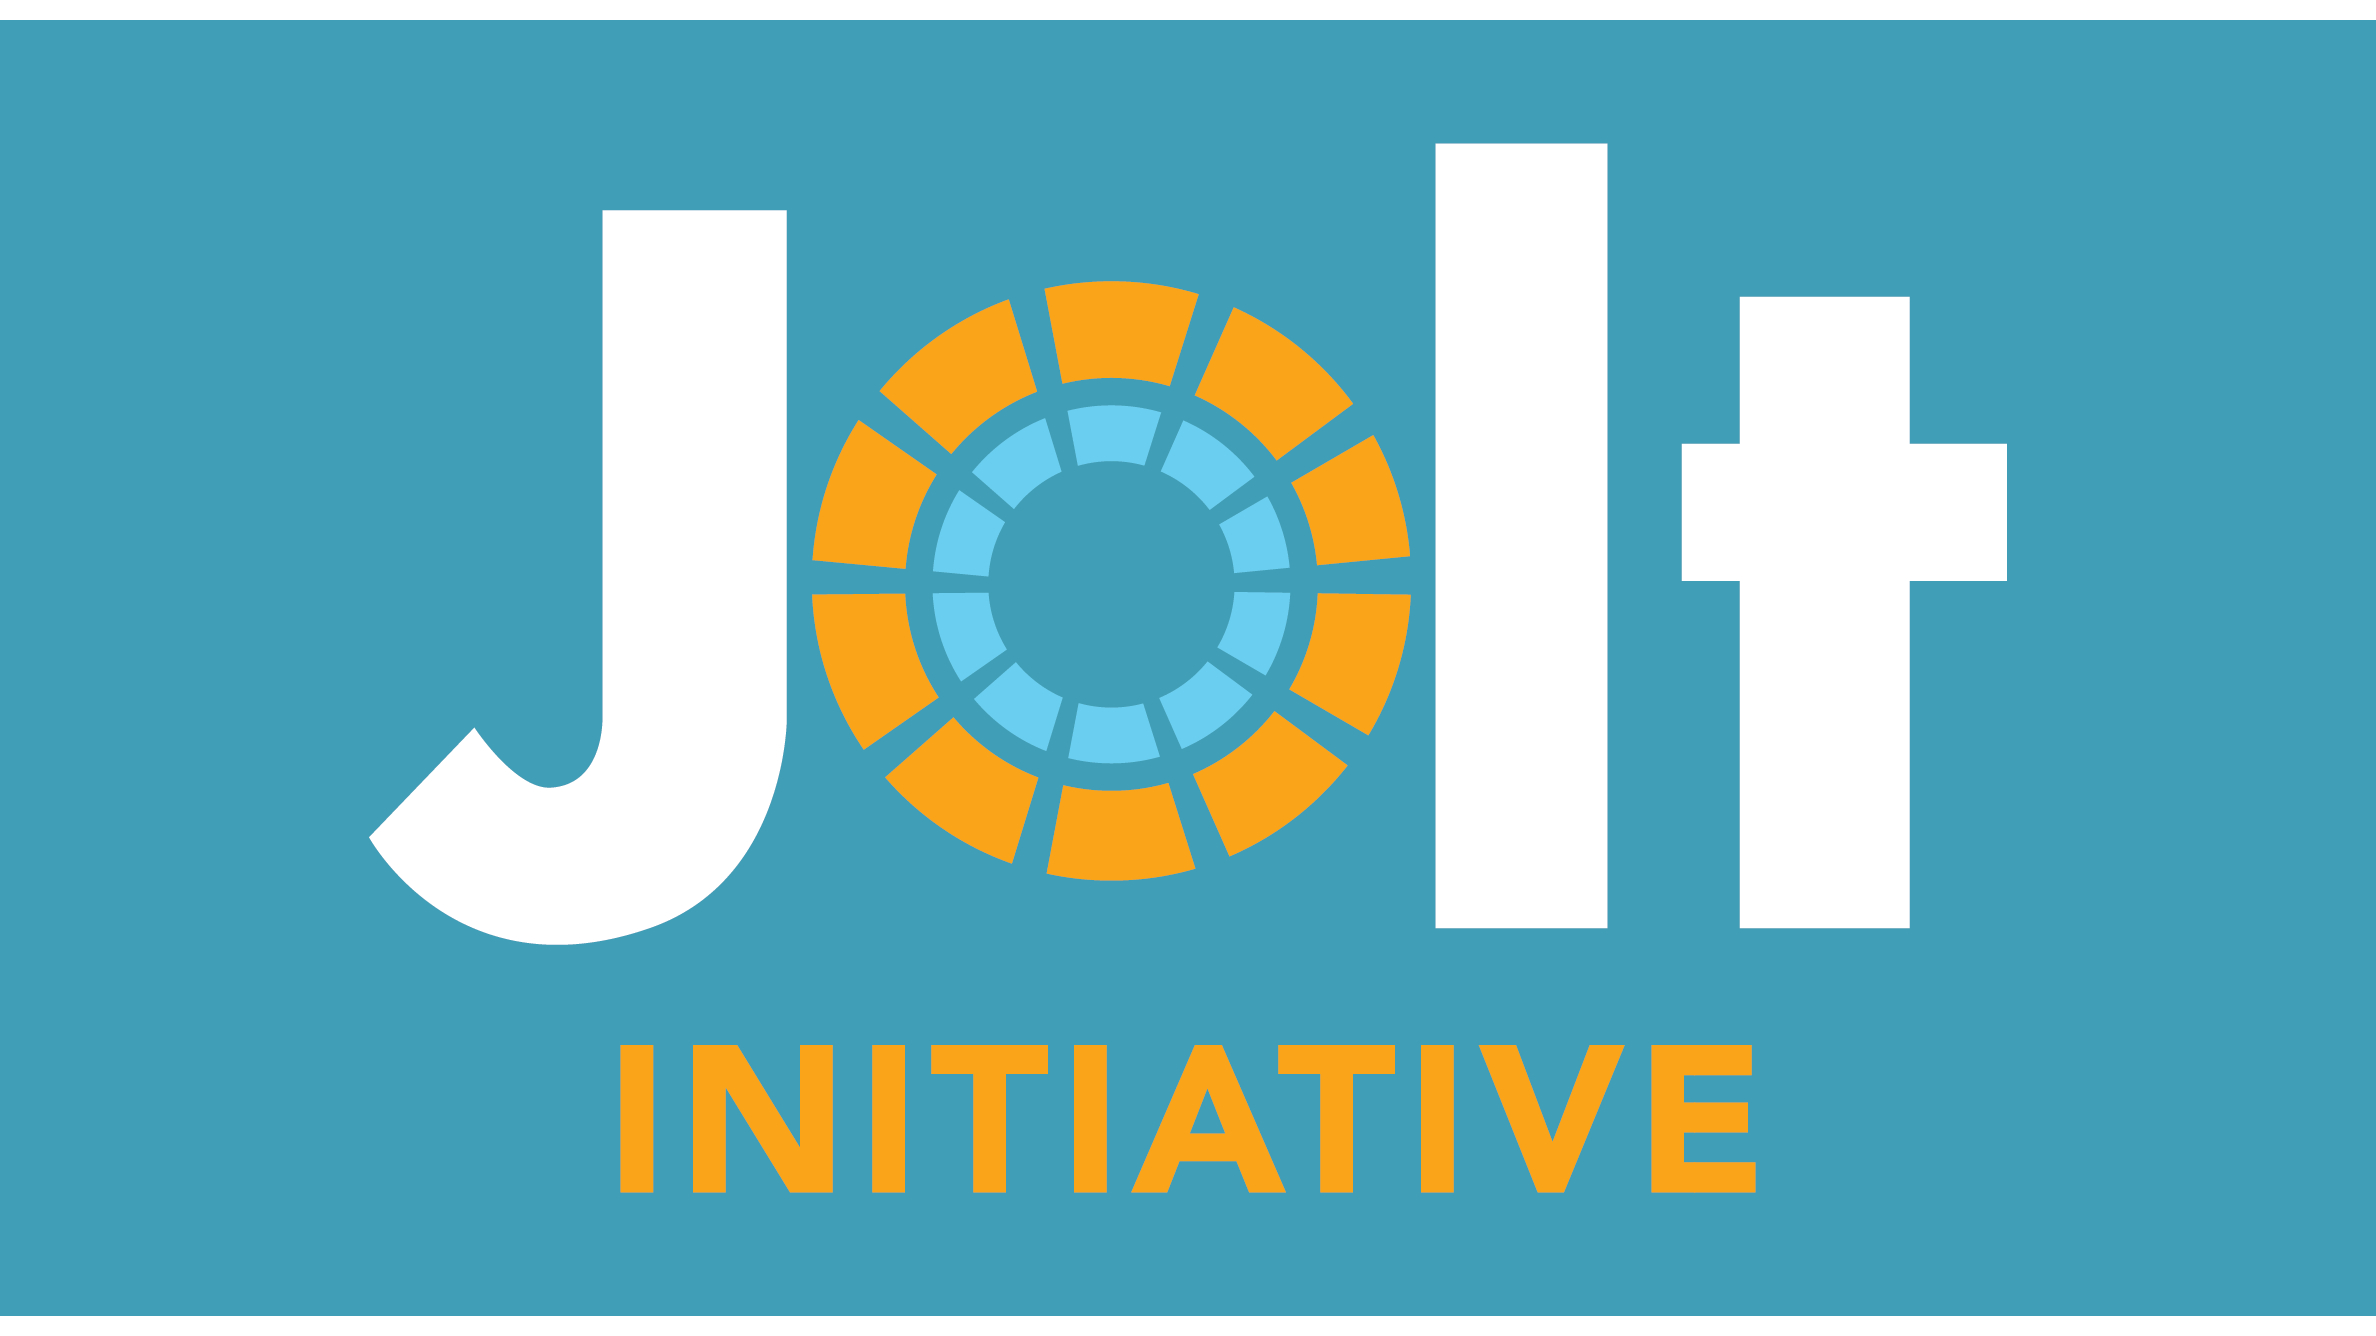 Jolt Initiative logo